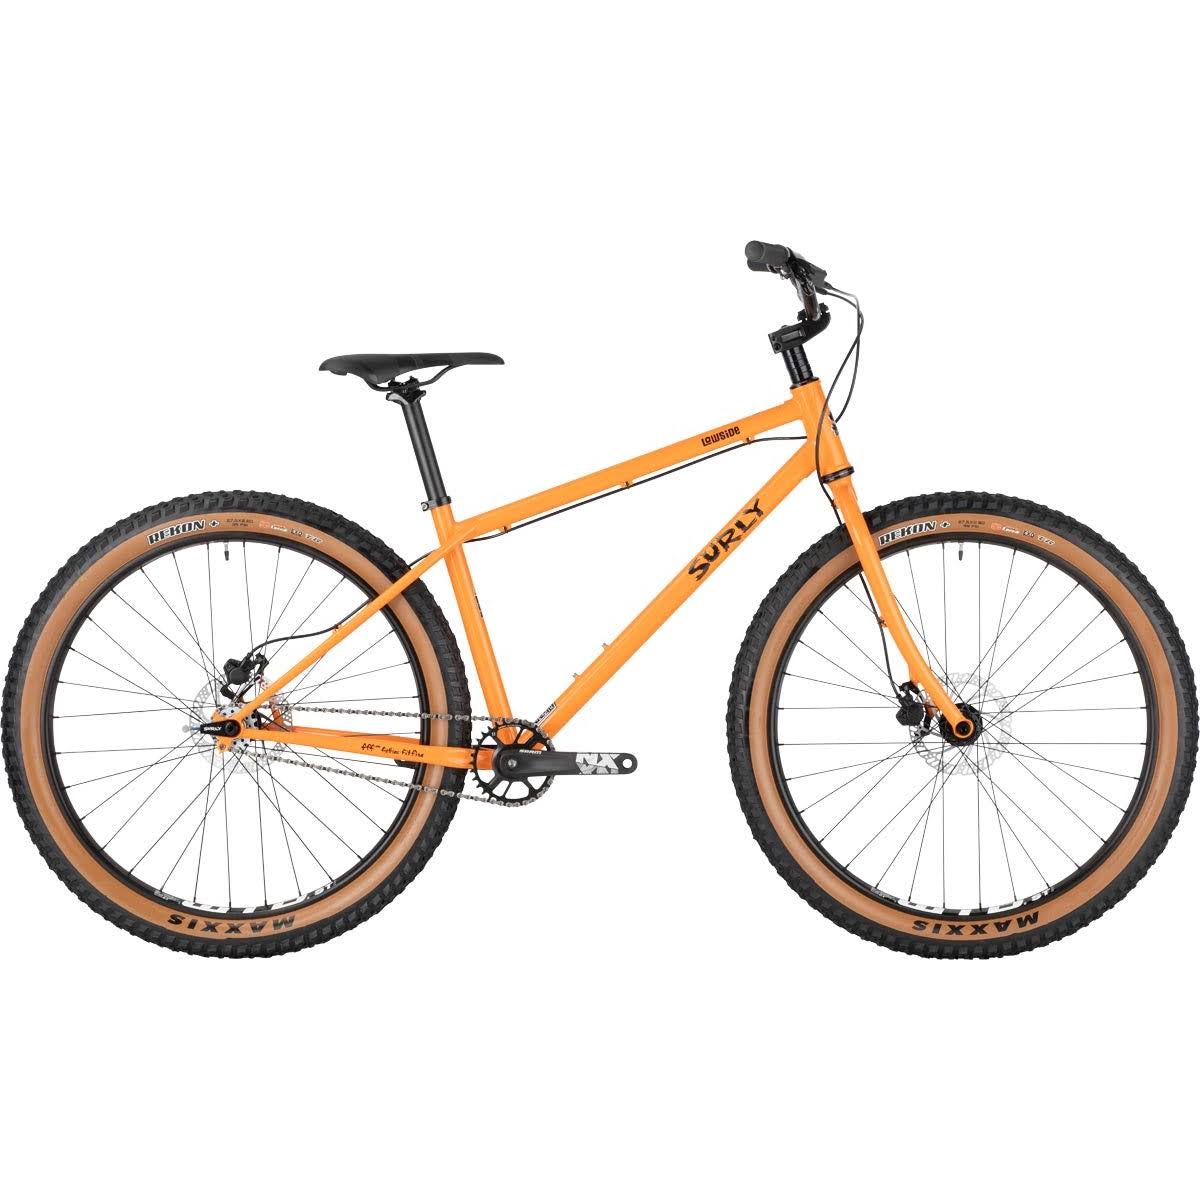 Surly Lowside Bike - Dream Tangerine Small